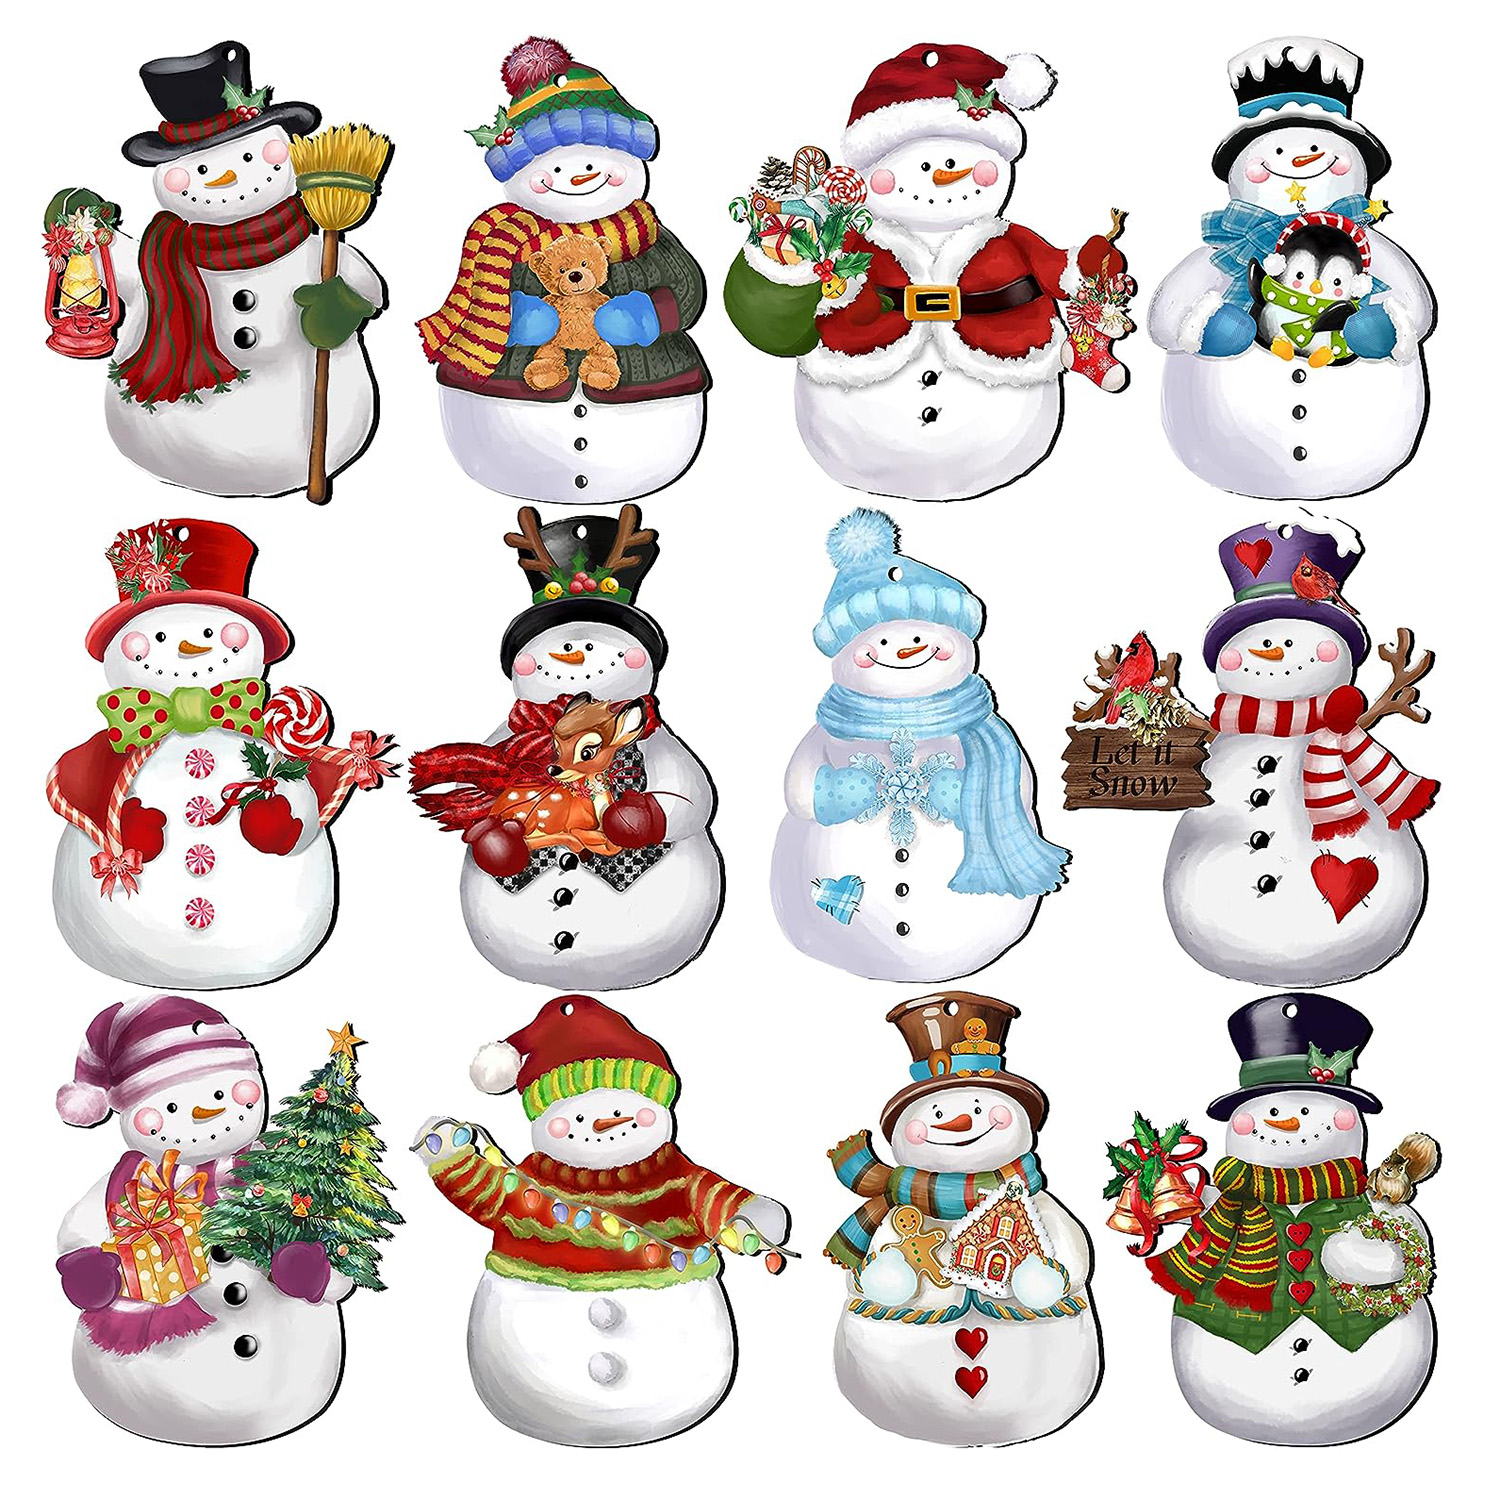 

24pcs, Christmas Snowman Wooden Hanging Ornaments, Tree Decorations, Yard Decoration, Yard Supplies, Party Decor, Holiday Supplies, Holiday Arrangement, Garden Decor